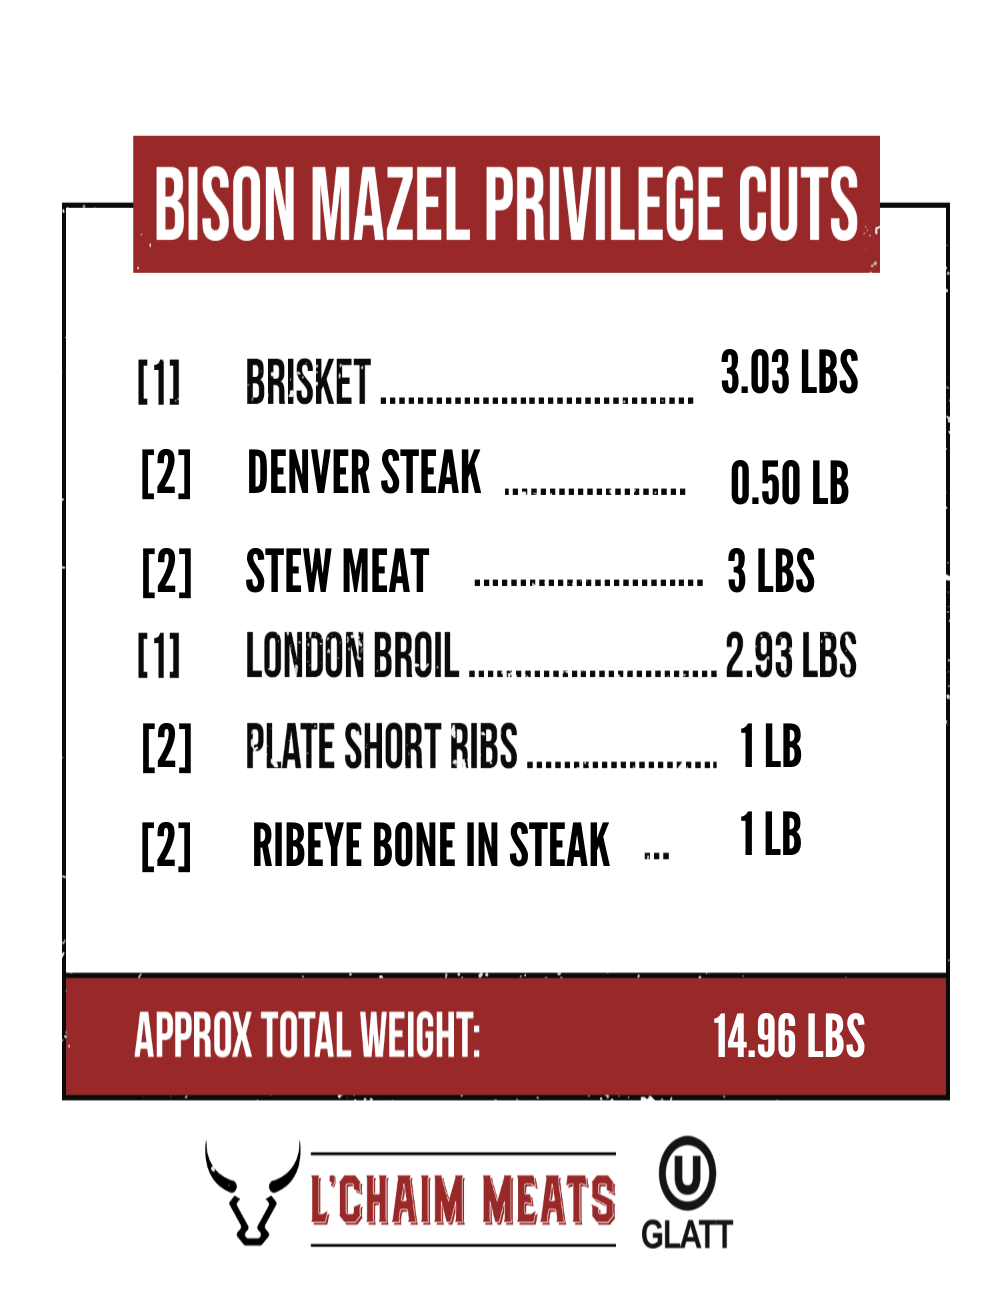 American Bison Mazel Kuts Privilege  Box